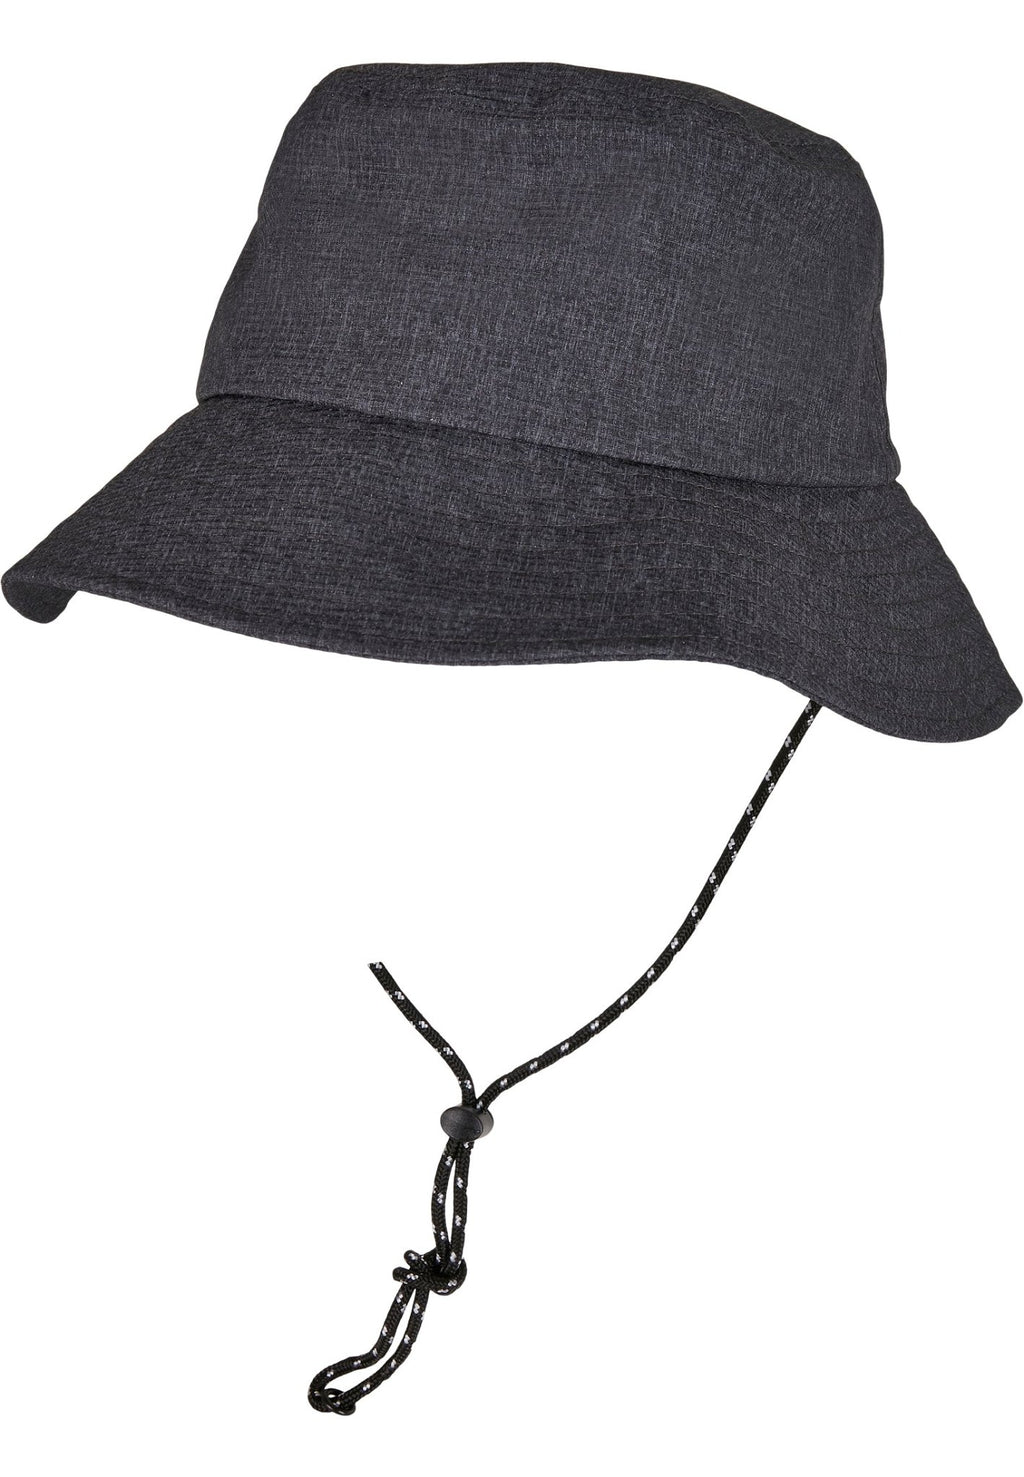 Adjustable Flexfit Bucket Hat - Heather grey